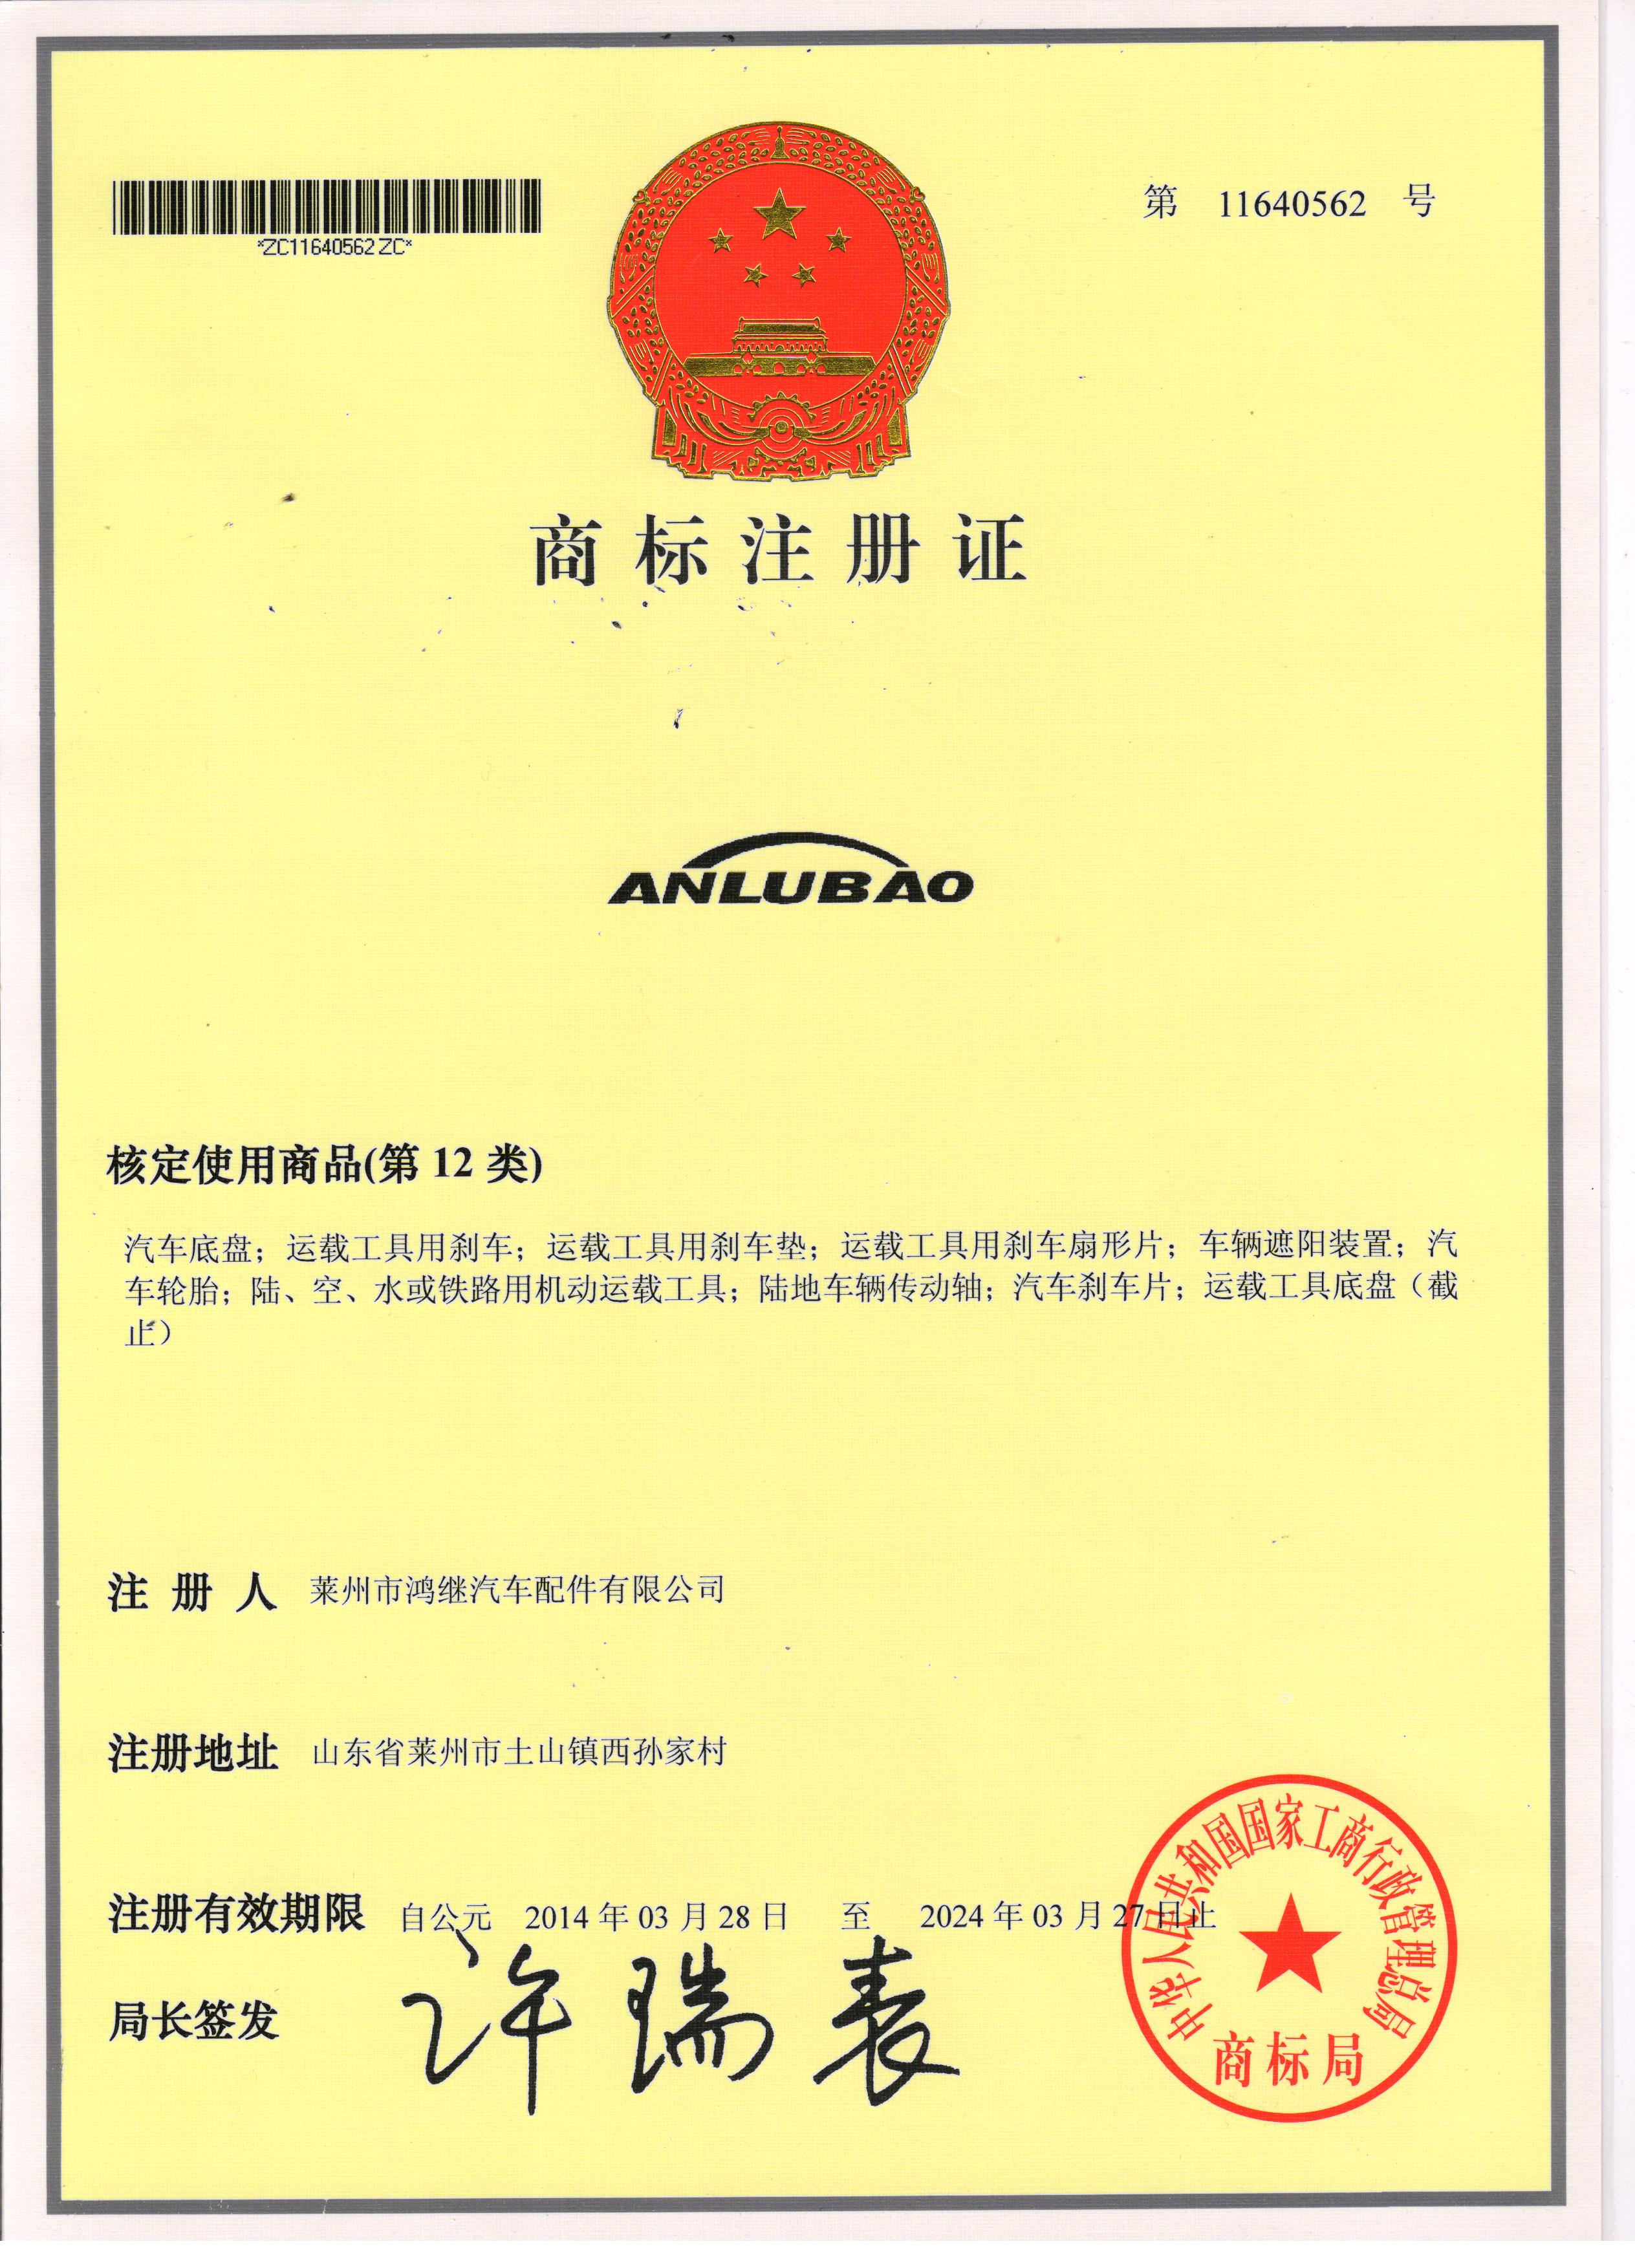 AnLuBao trademark